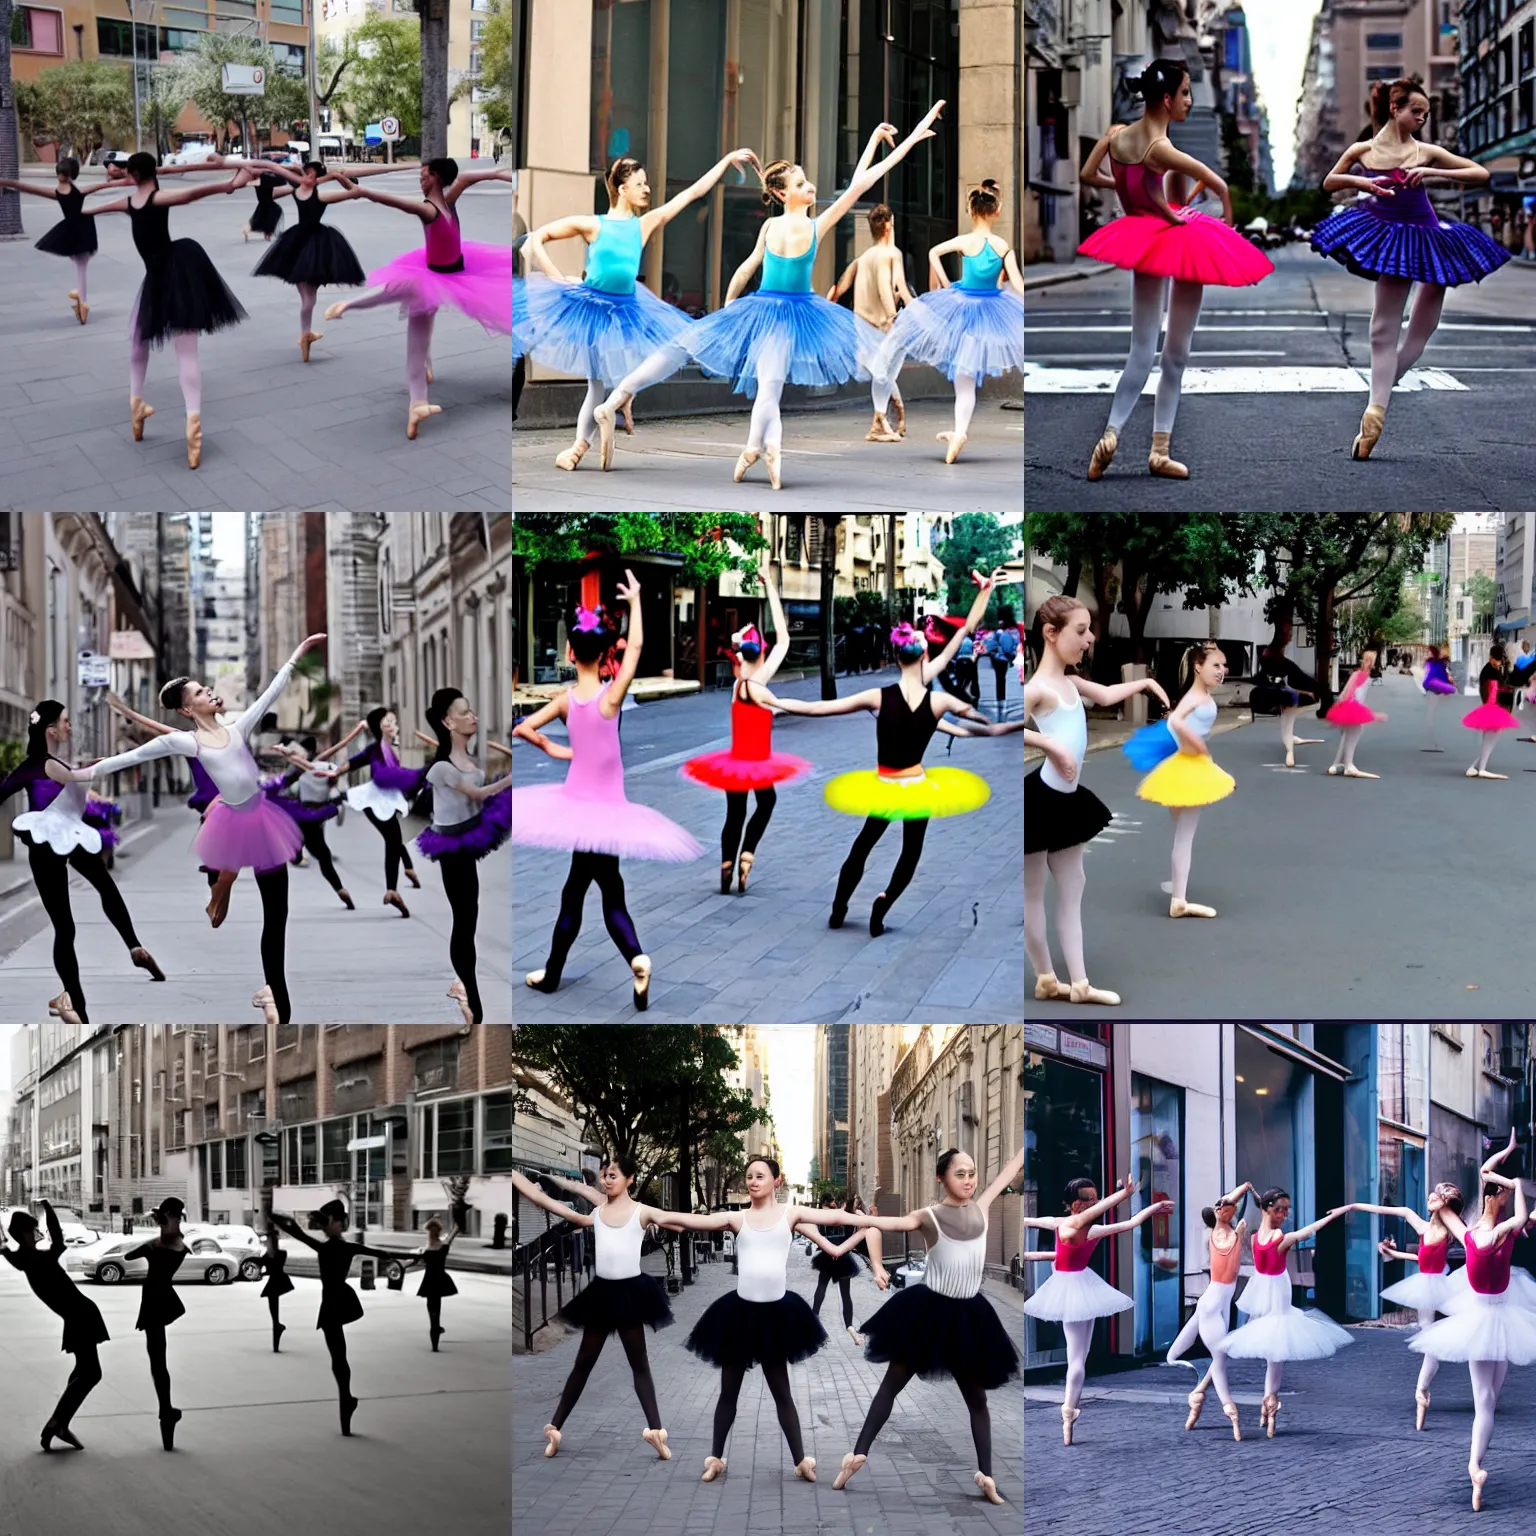 Prompt: Computer dancing ballet on the street